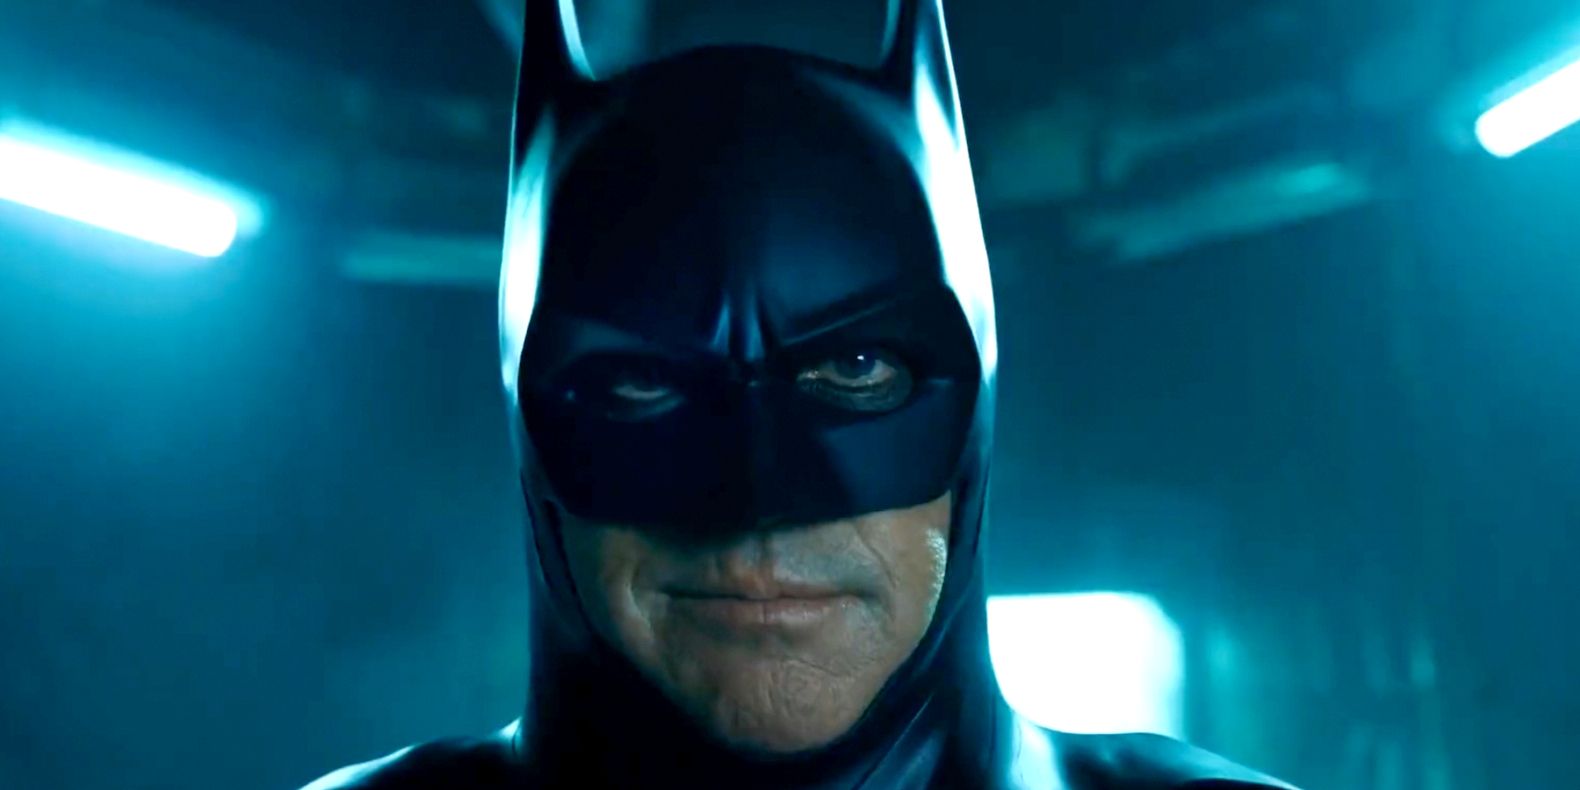 Michael Keaton looking stern as Batman in The Flash